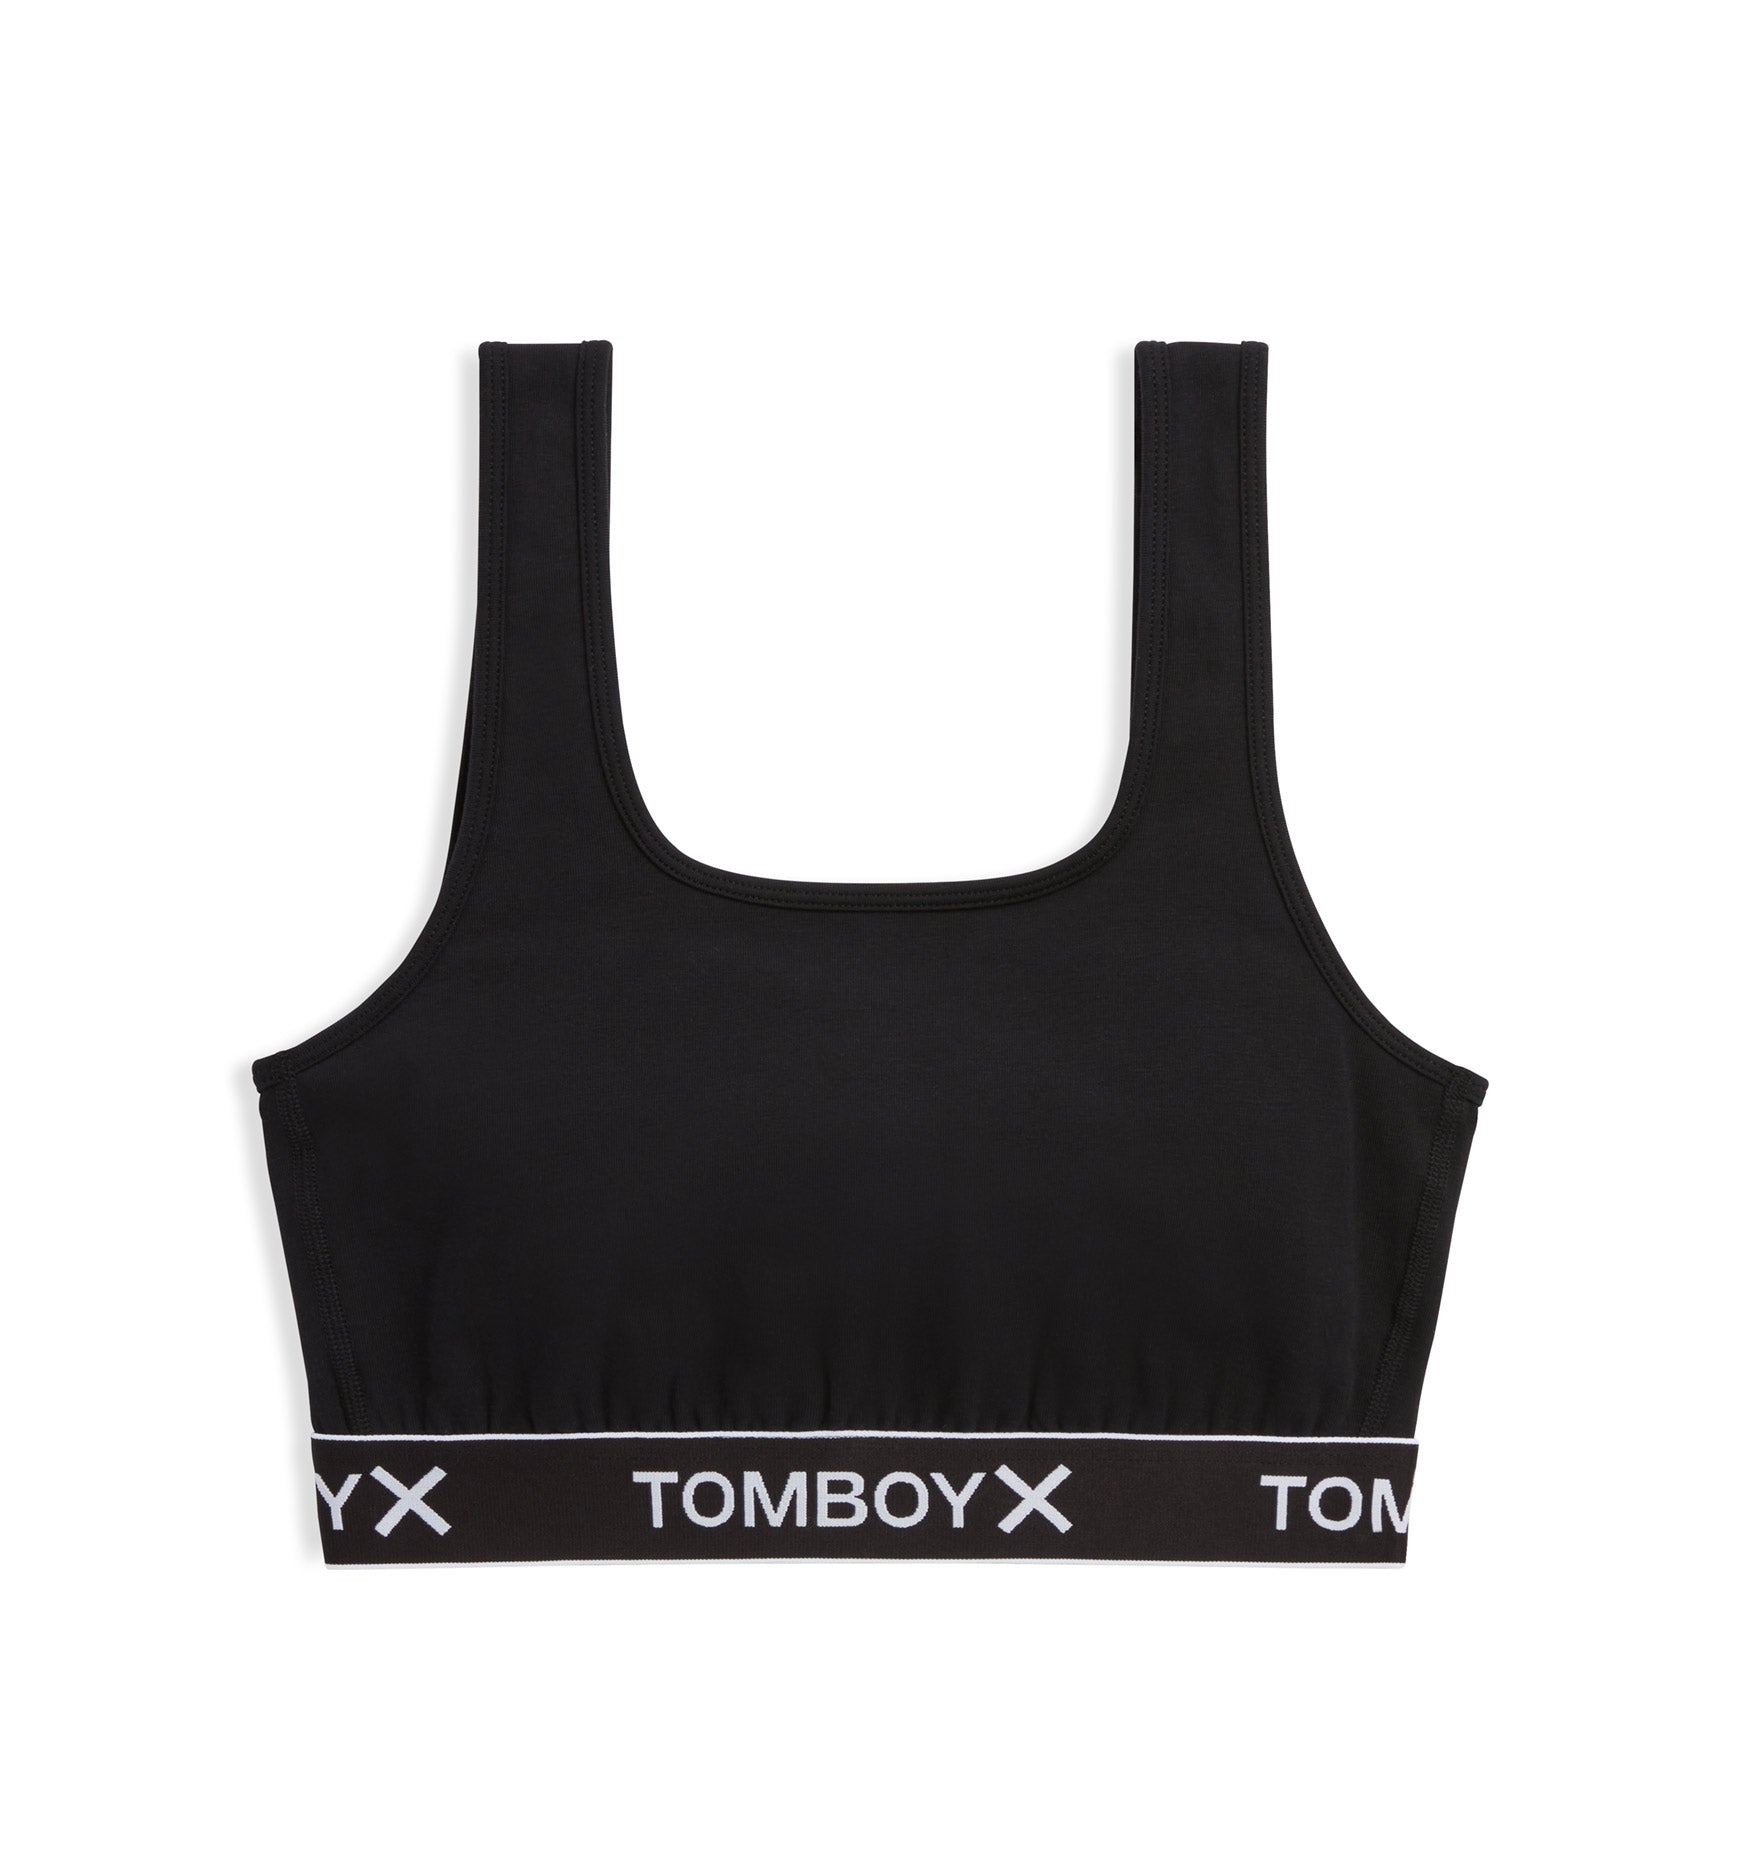 New Bra Styles – TomboyX